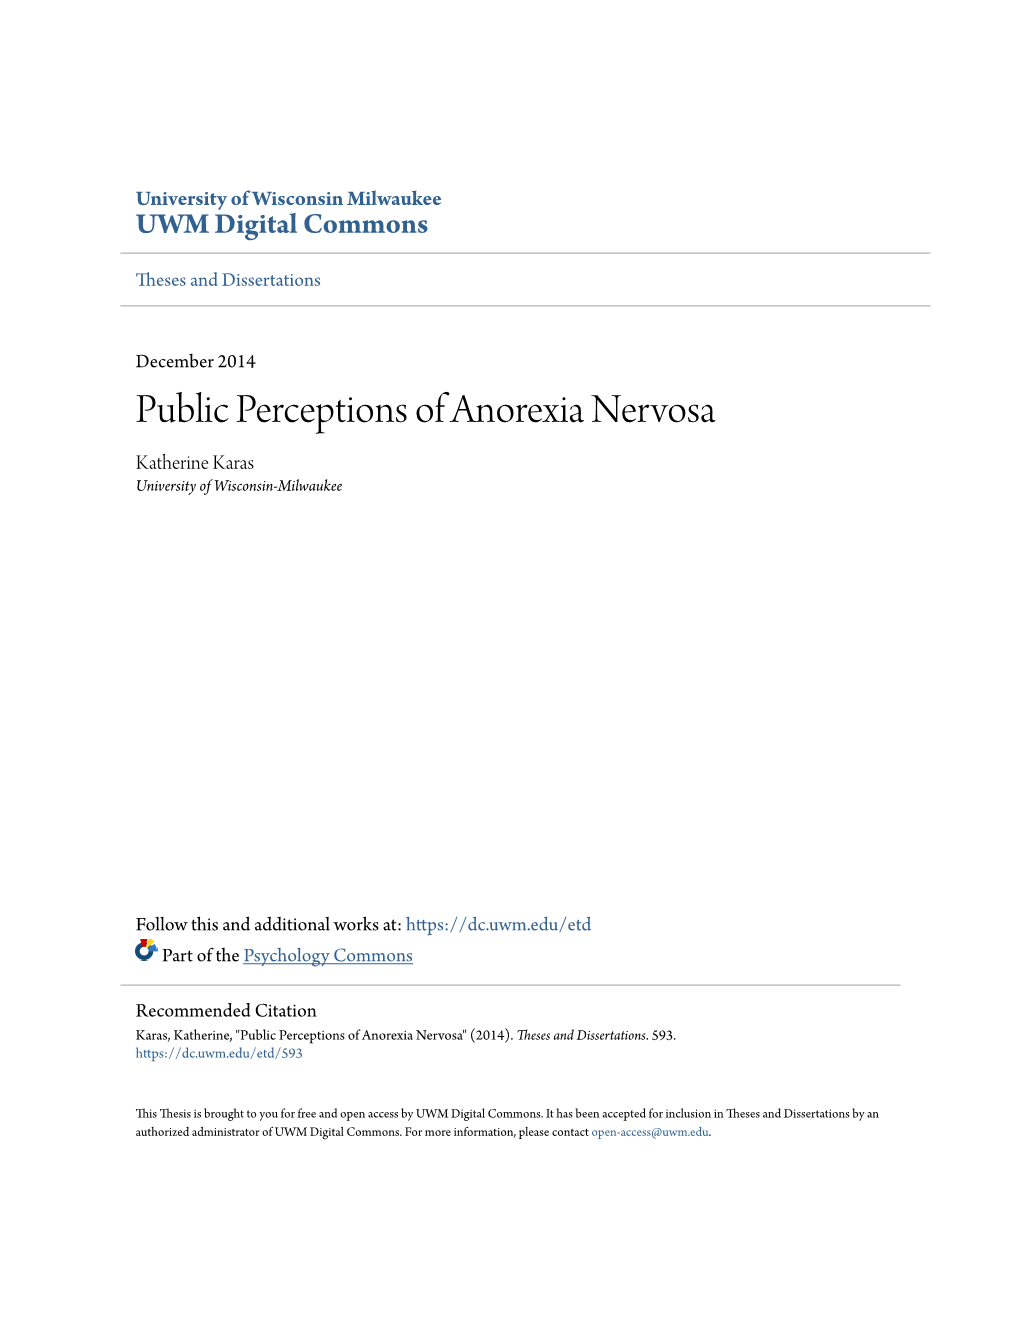 Public Perceptions of Anorexia Nervosa Katherine Karas University of Wisconsin-Milwaukee